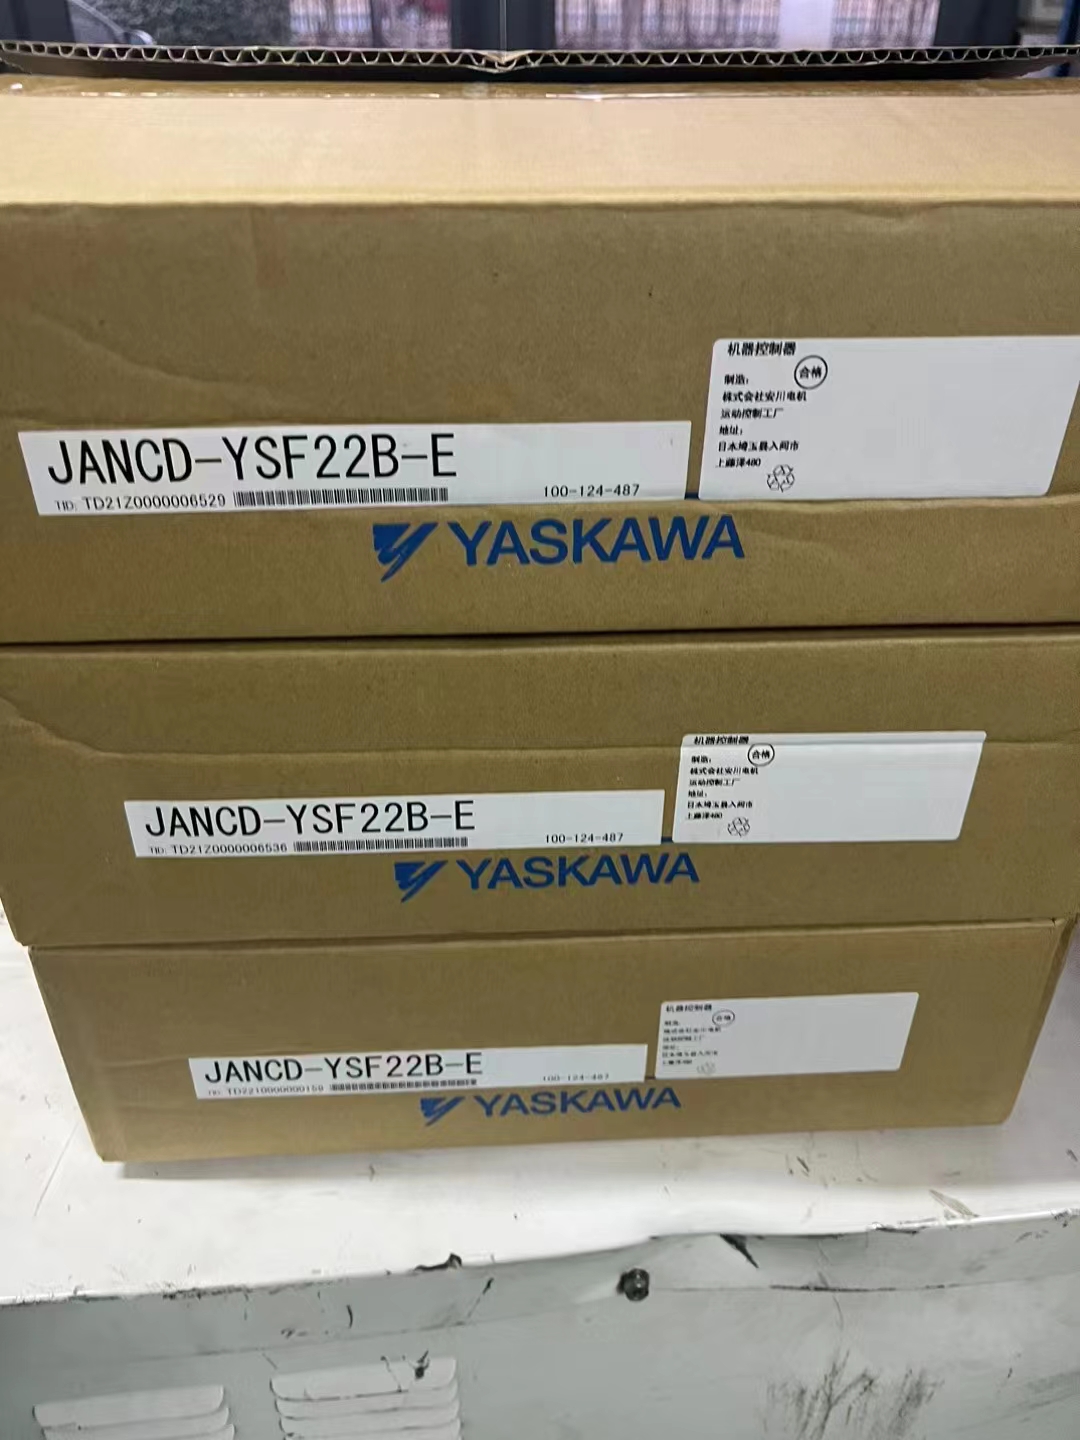 YASKAWA ROBOT DX200 JANCD-YSF22B-E